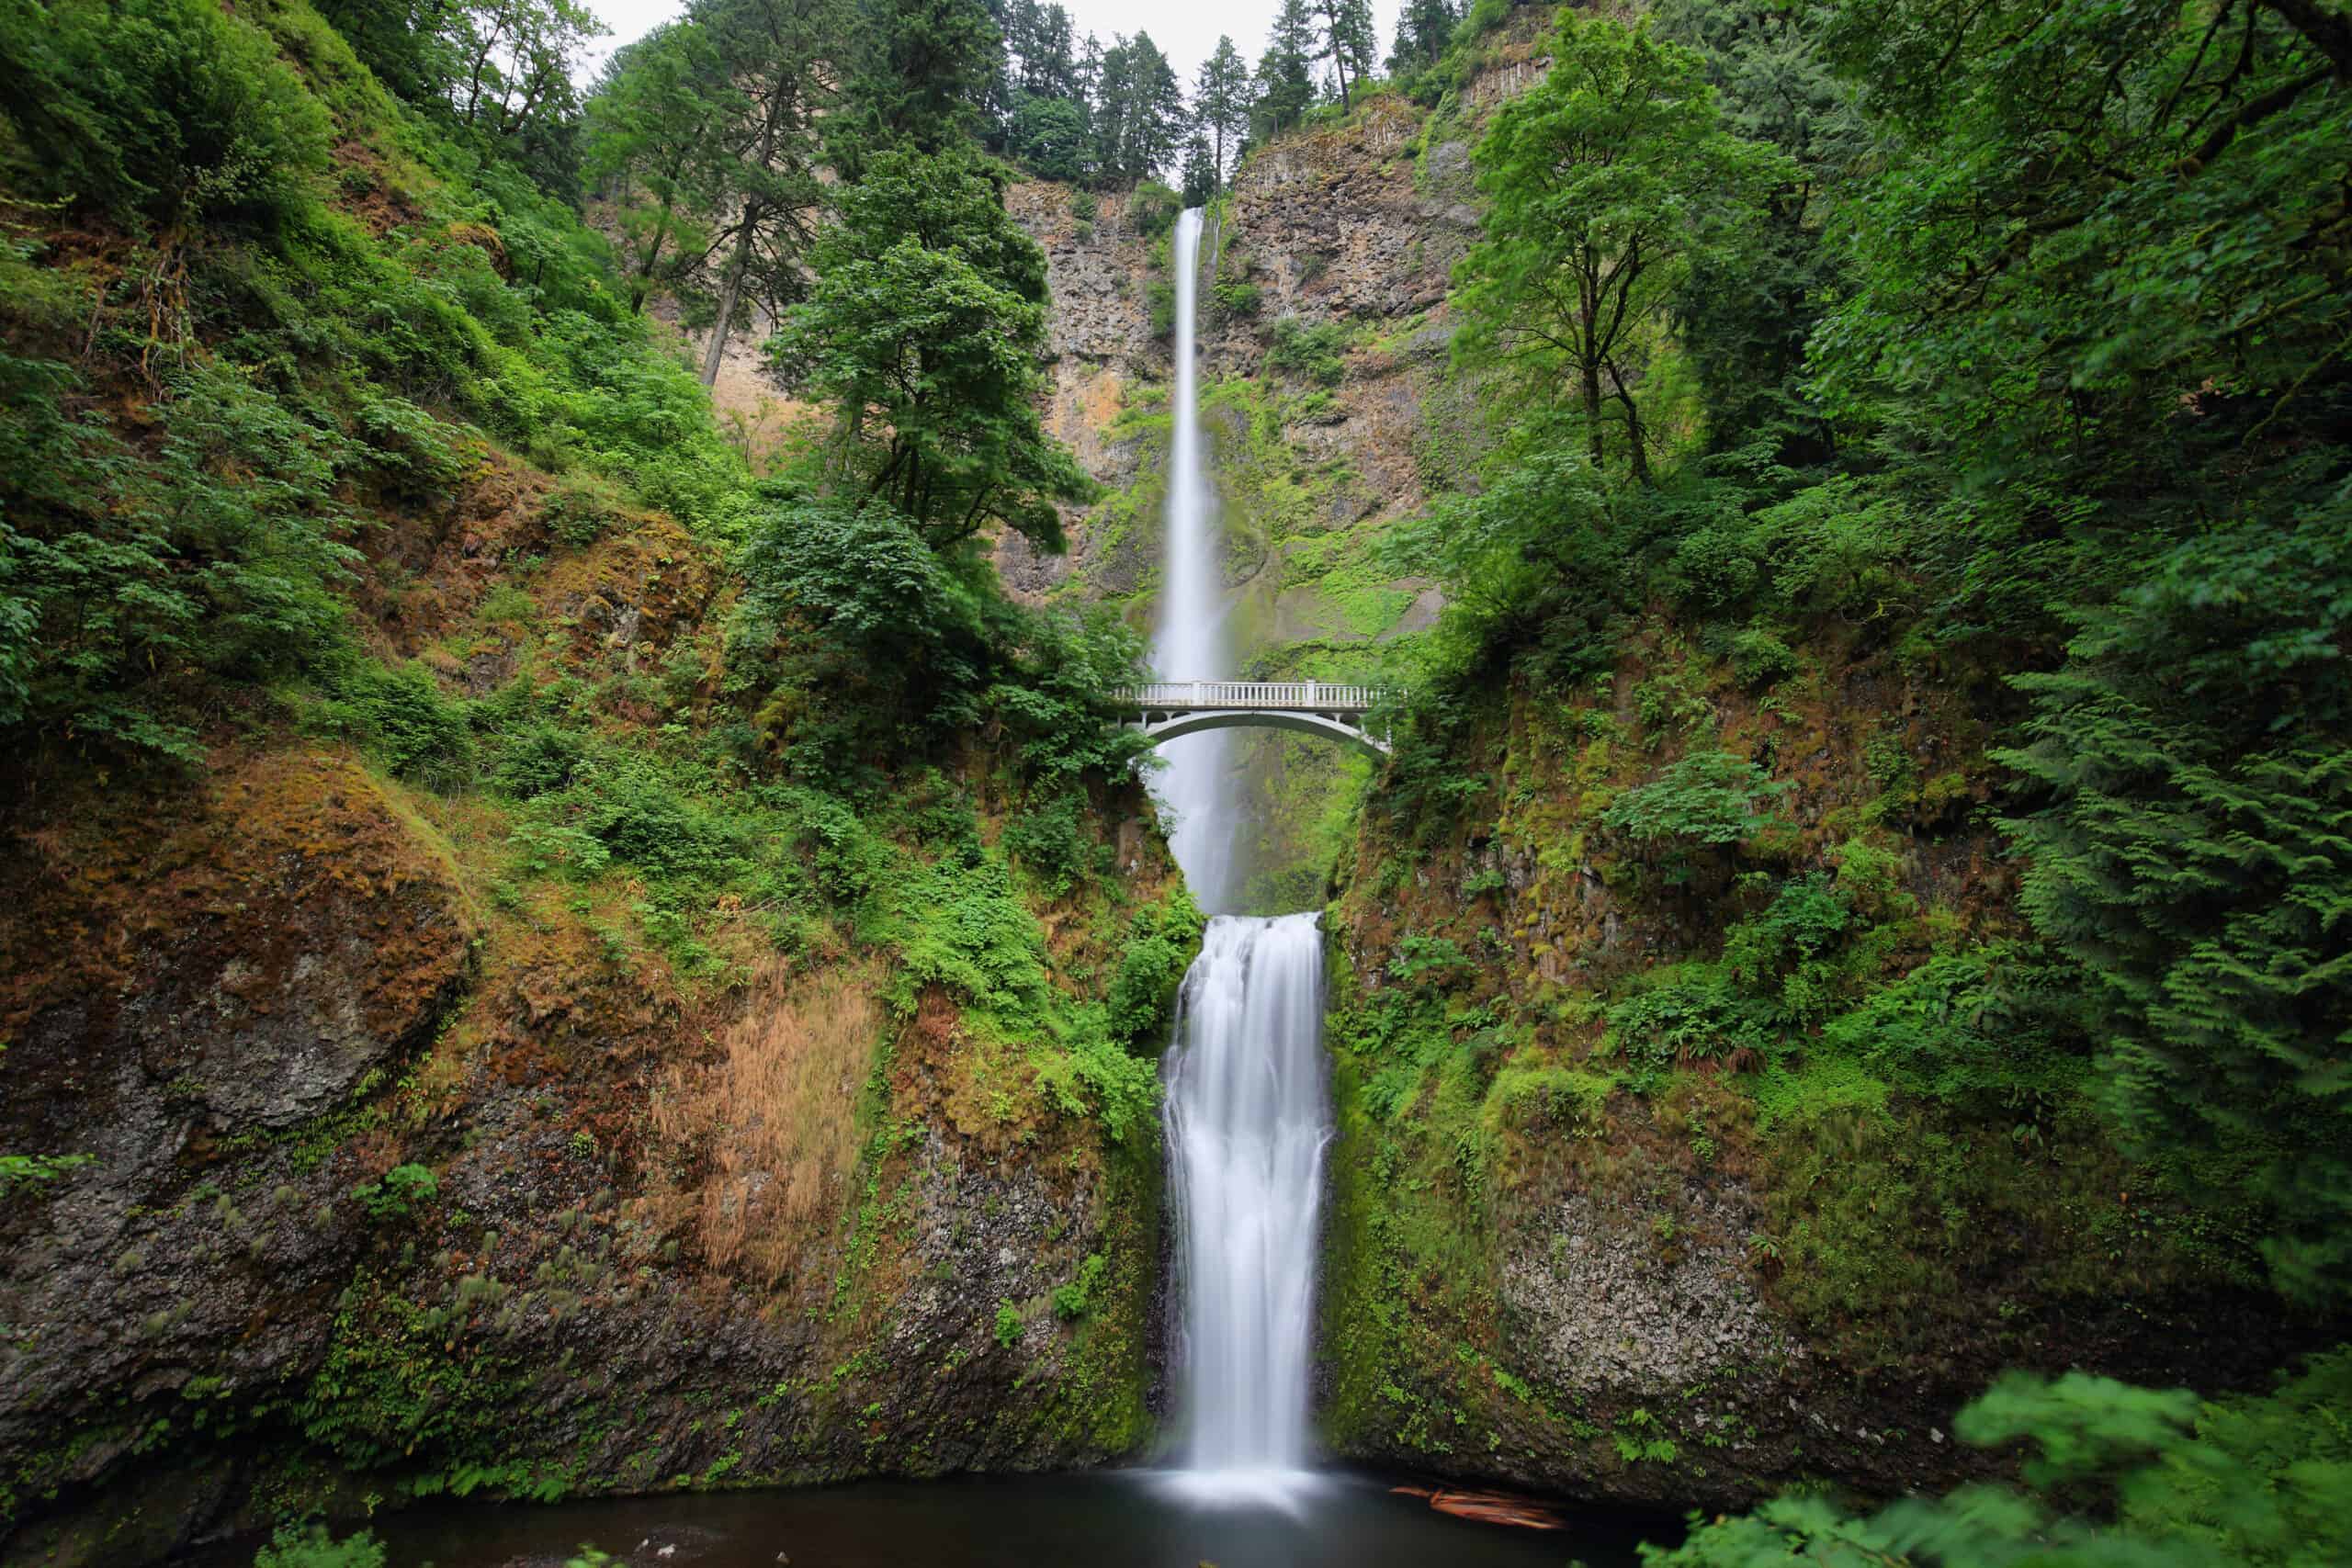 Multnomah Falls waterfall, Oregon